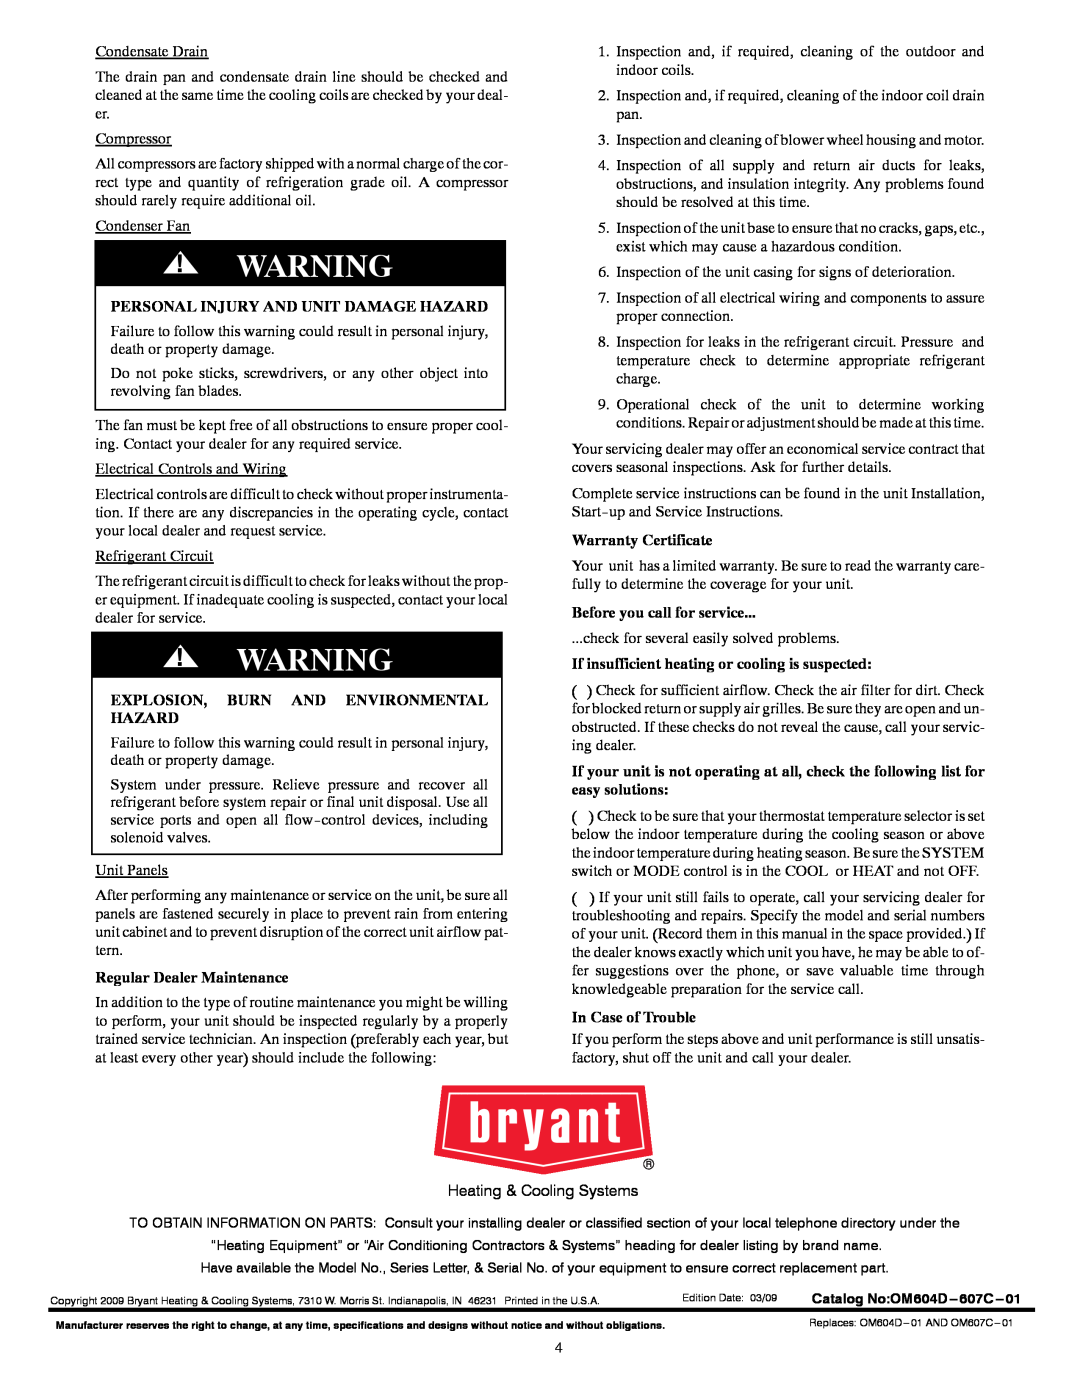 Bryant 604D Personal Injury And Unit Damage Hazard, Explosion, Burn And Environmental Hazard, Regular Dealer Maintenance 